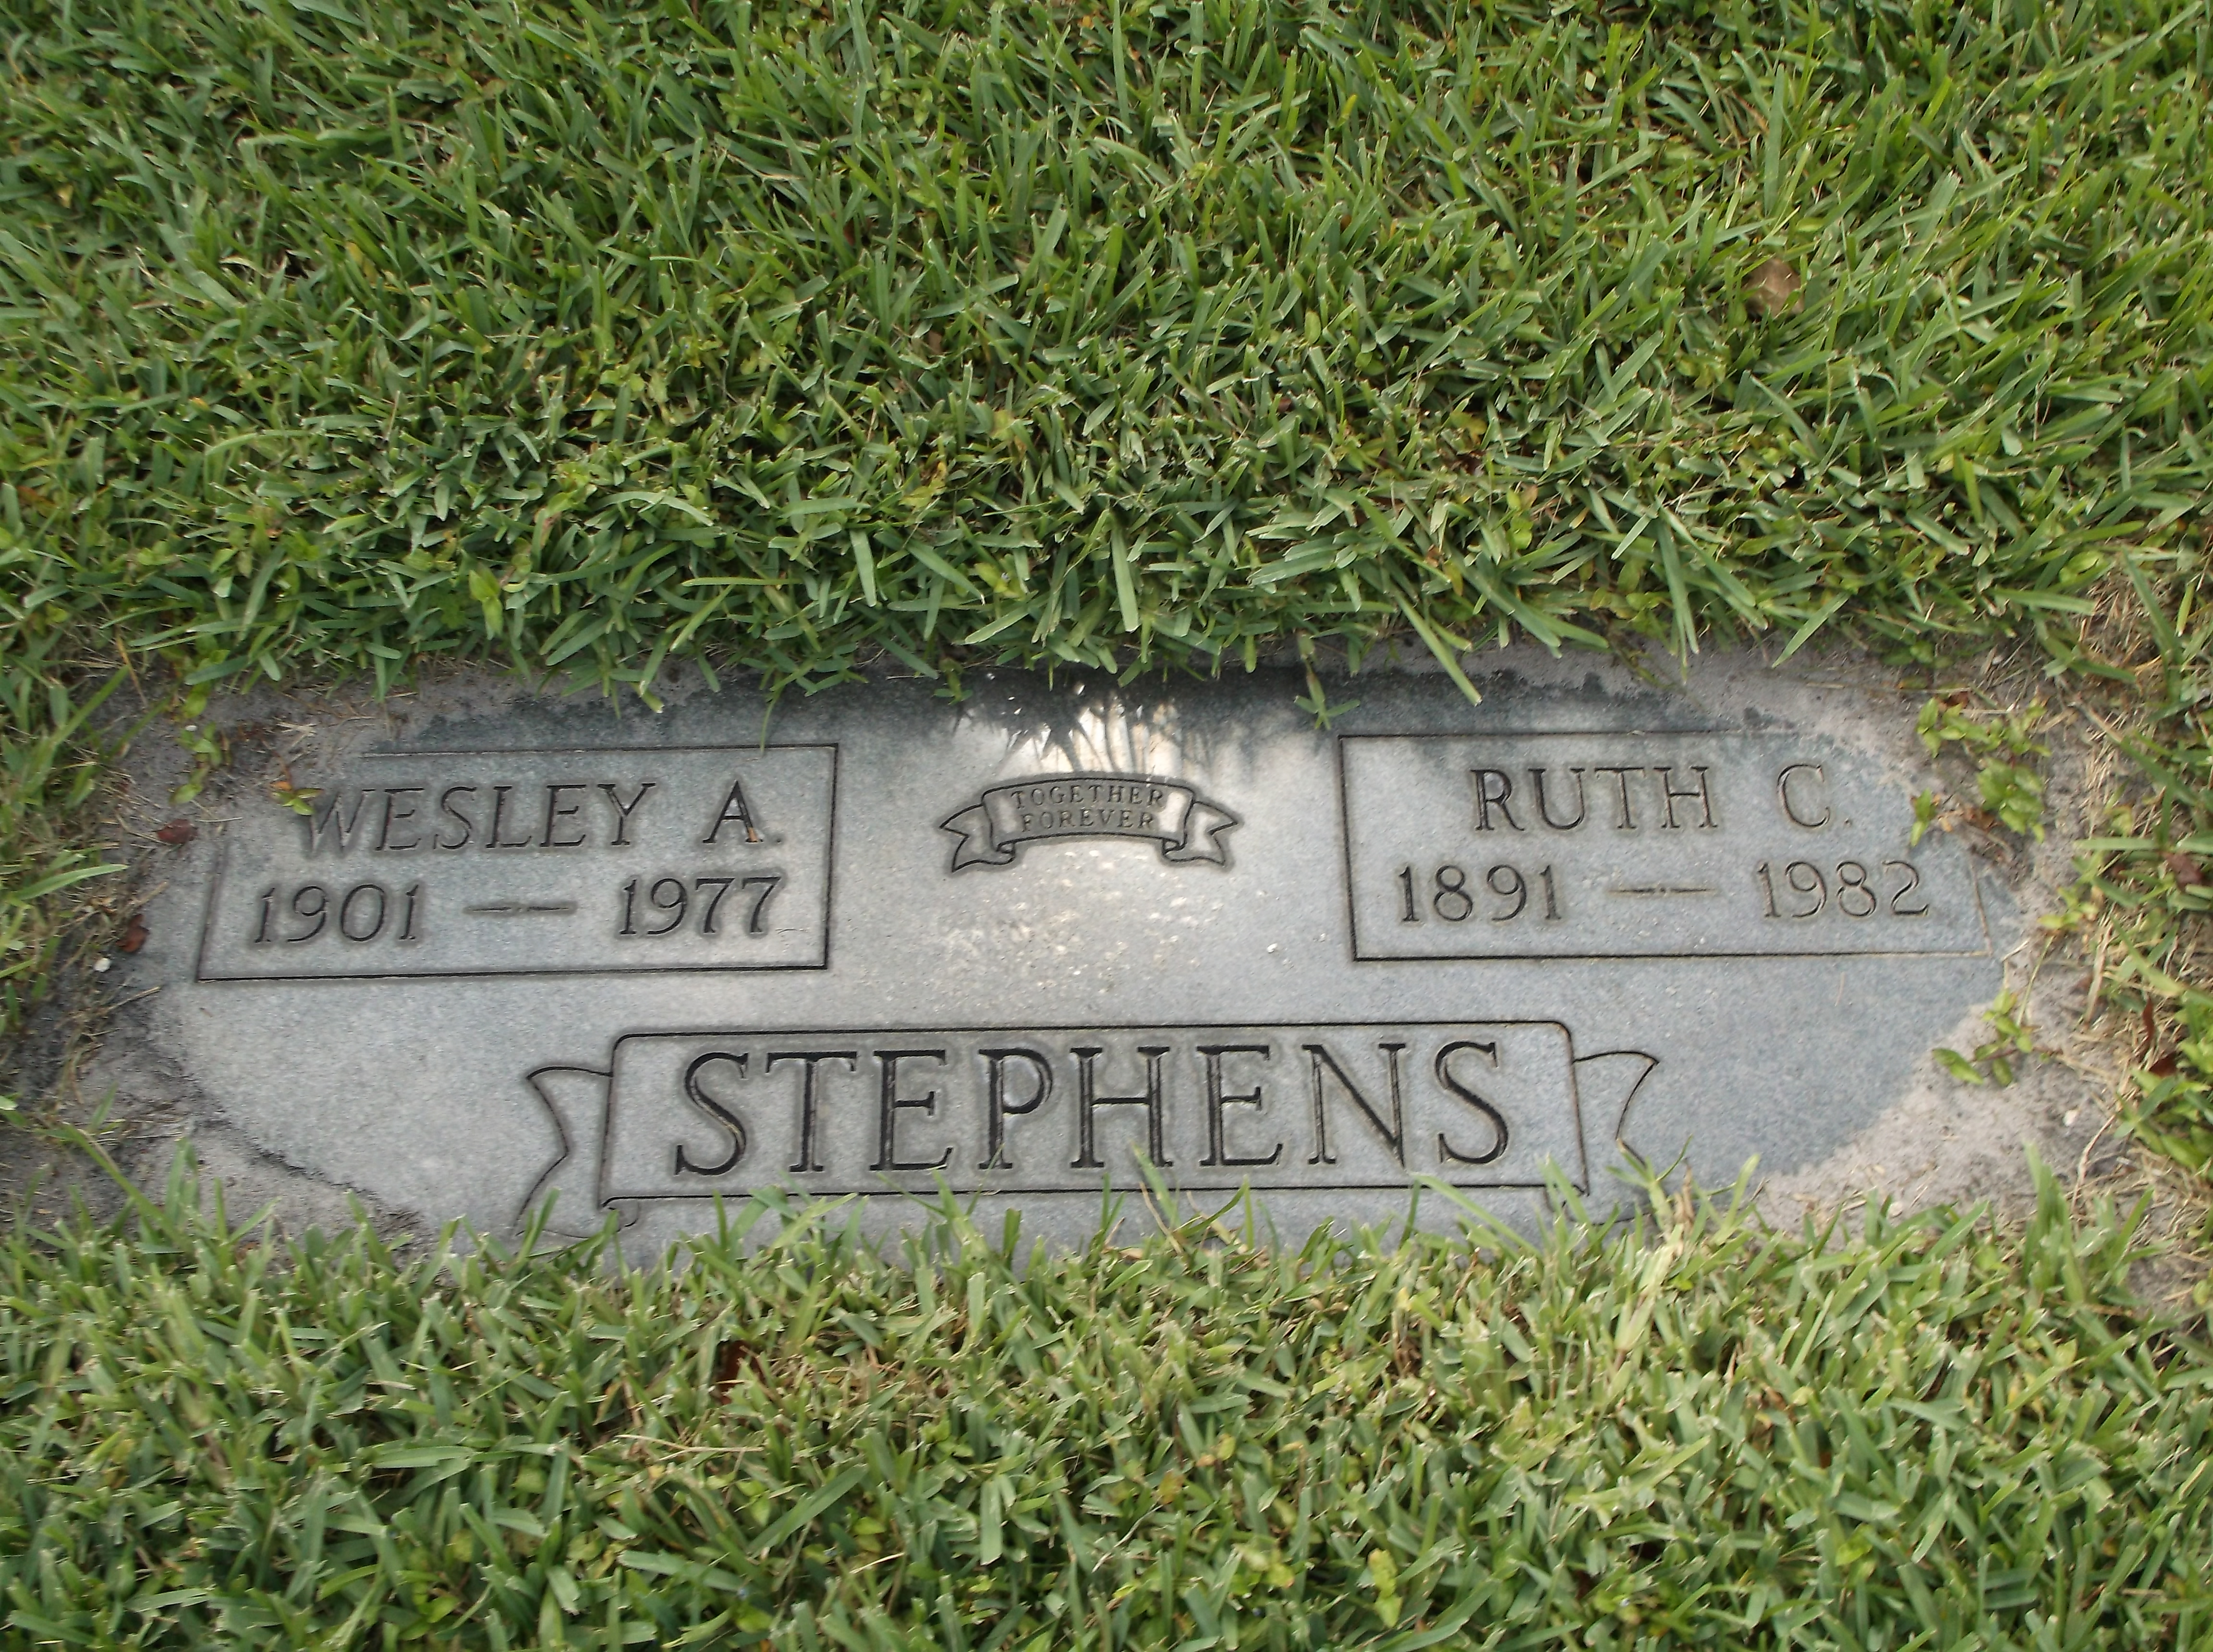 Ruth C Stephens